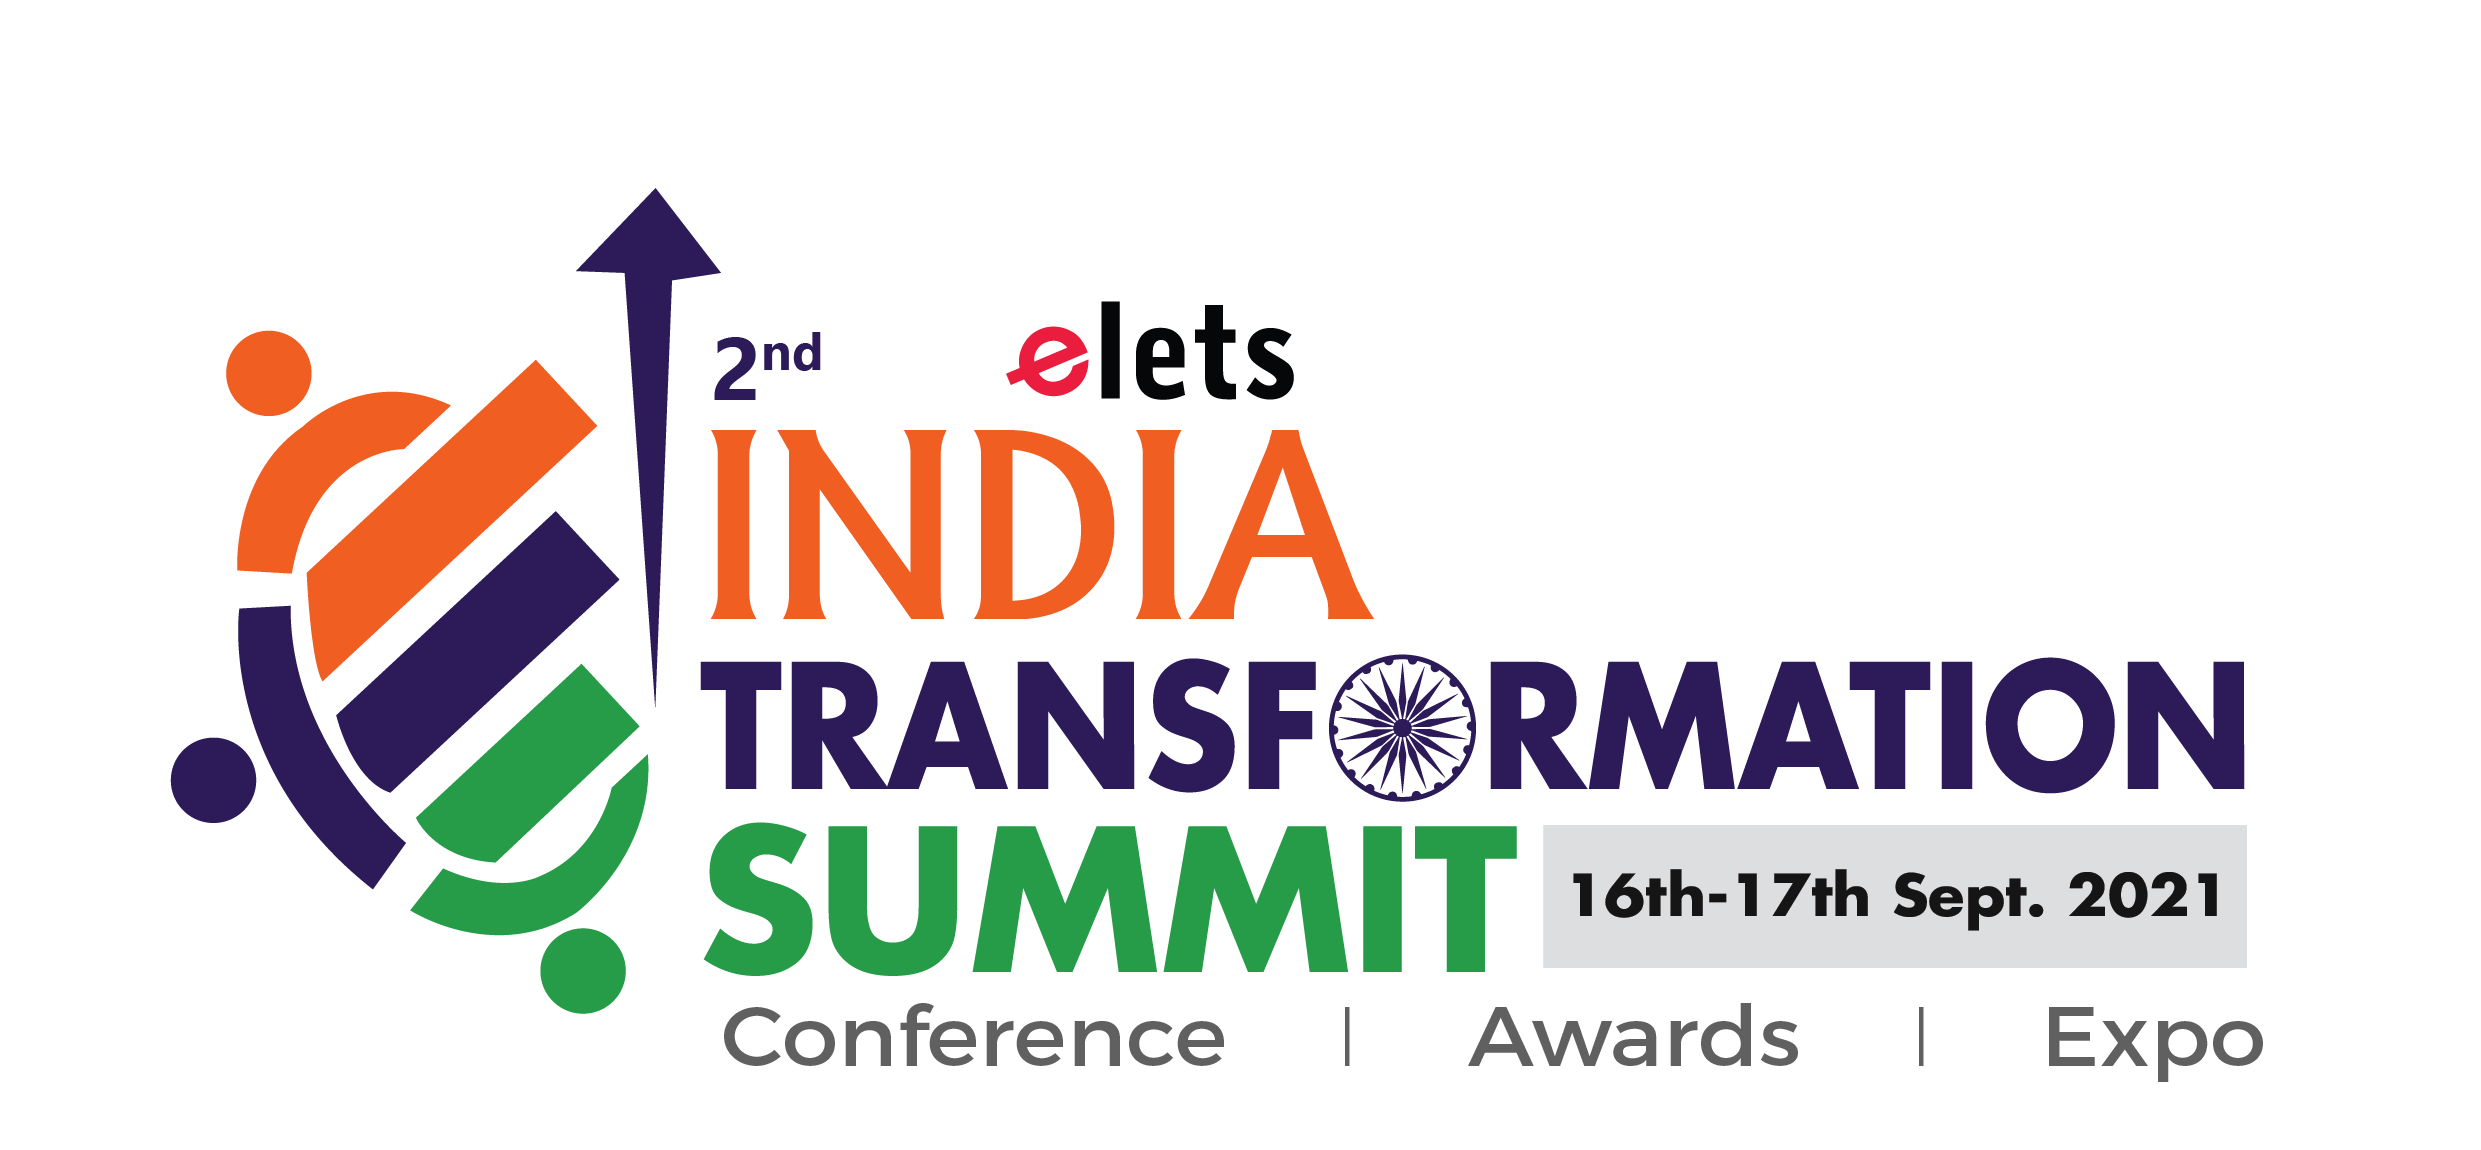 Elets India Transformation Summit 2021